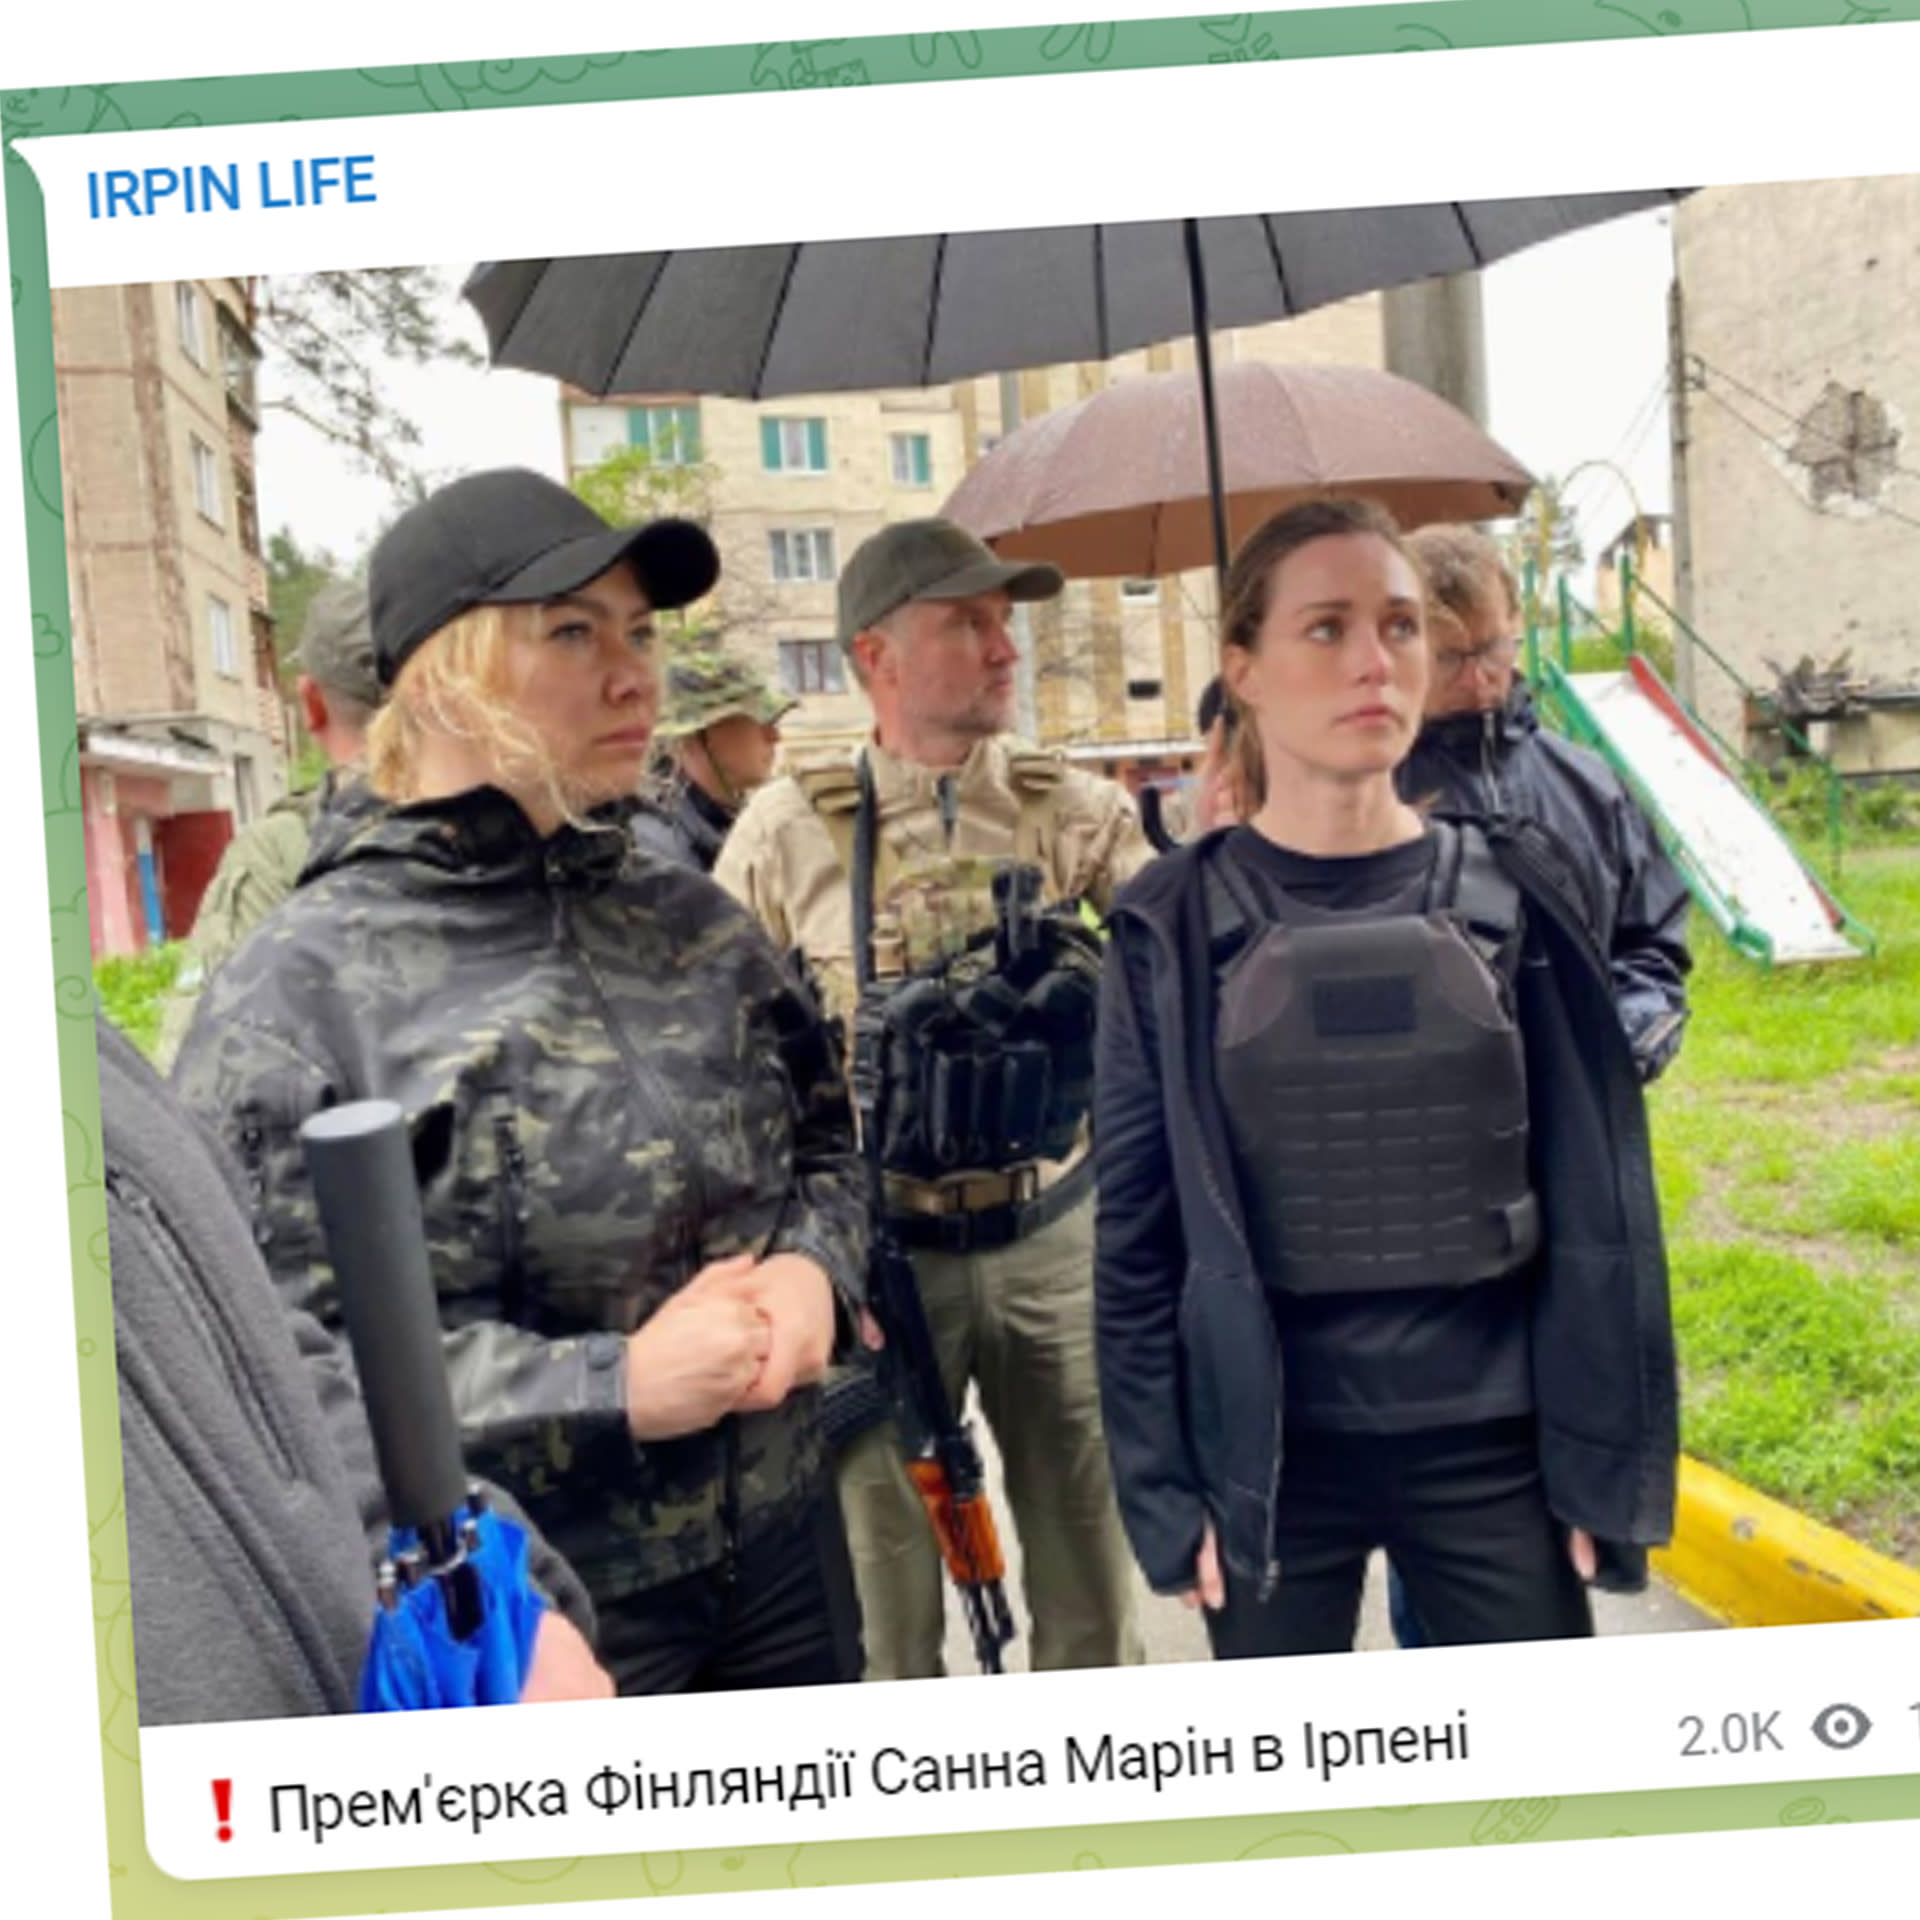 Marin is visiting Ukraine